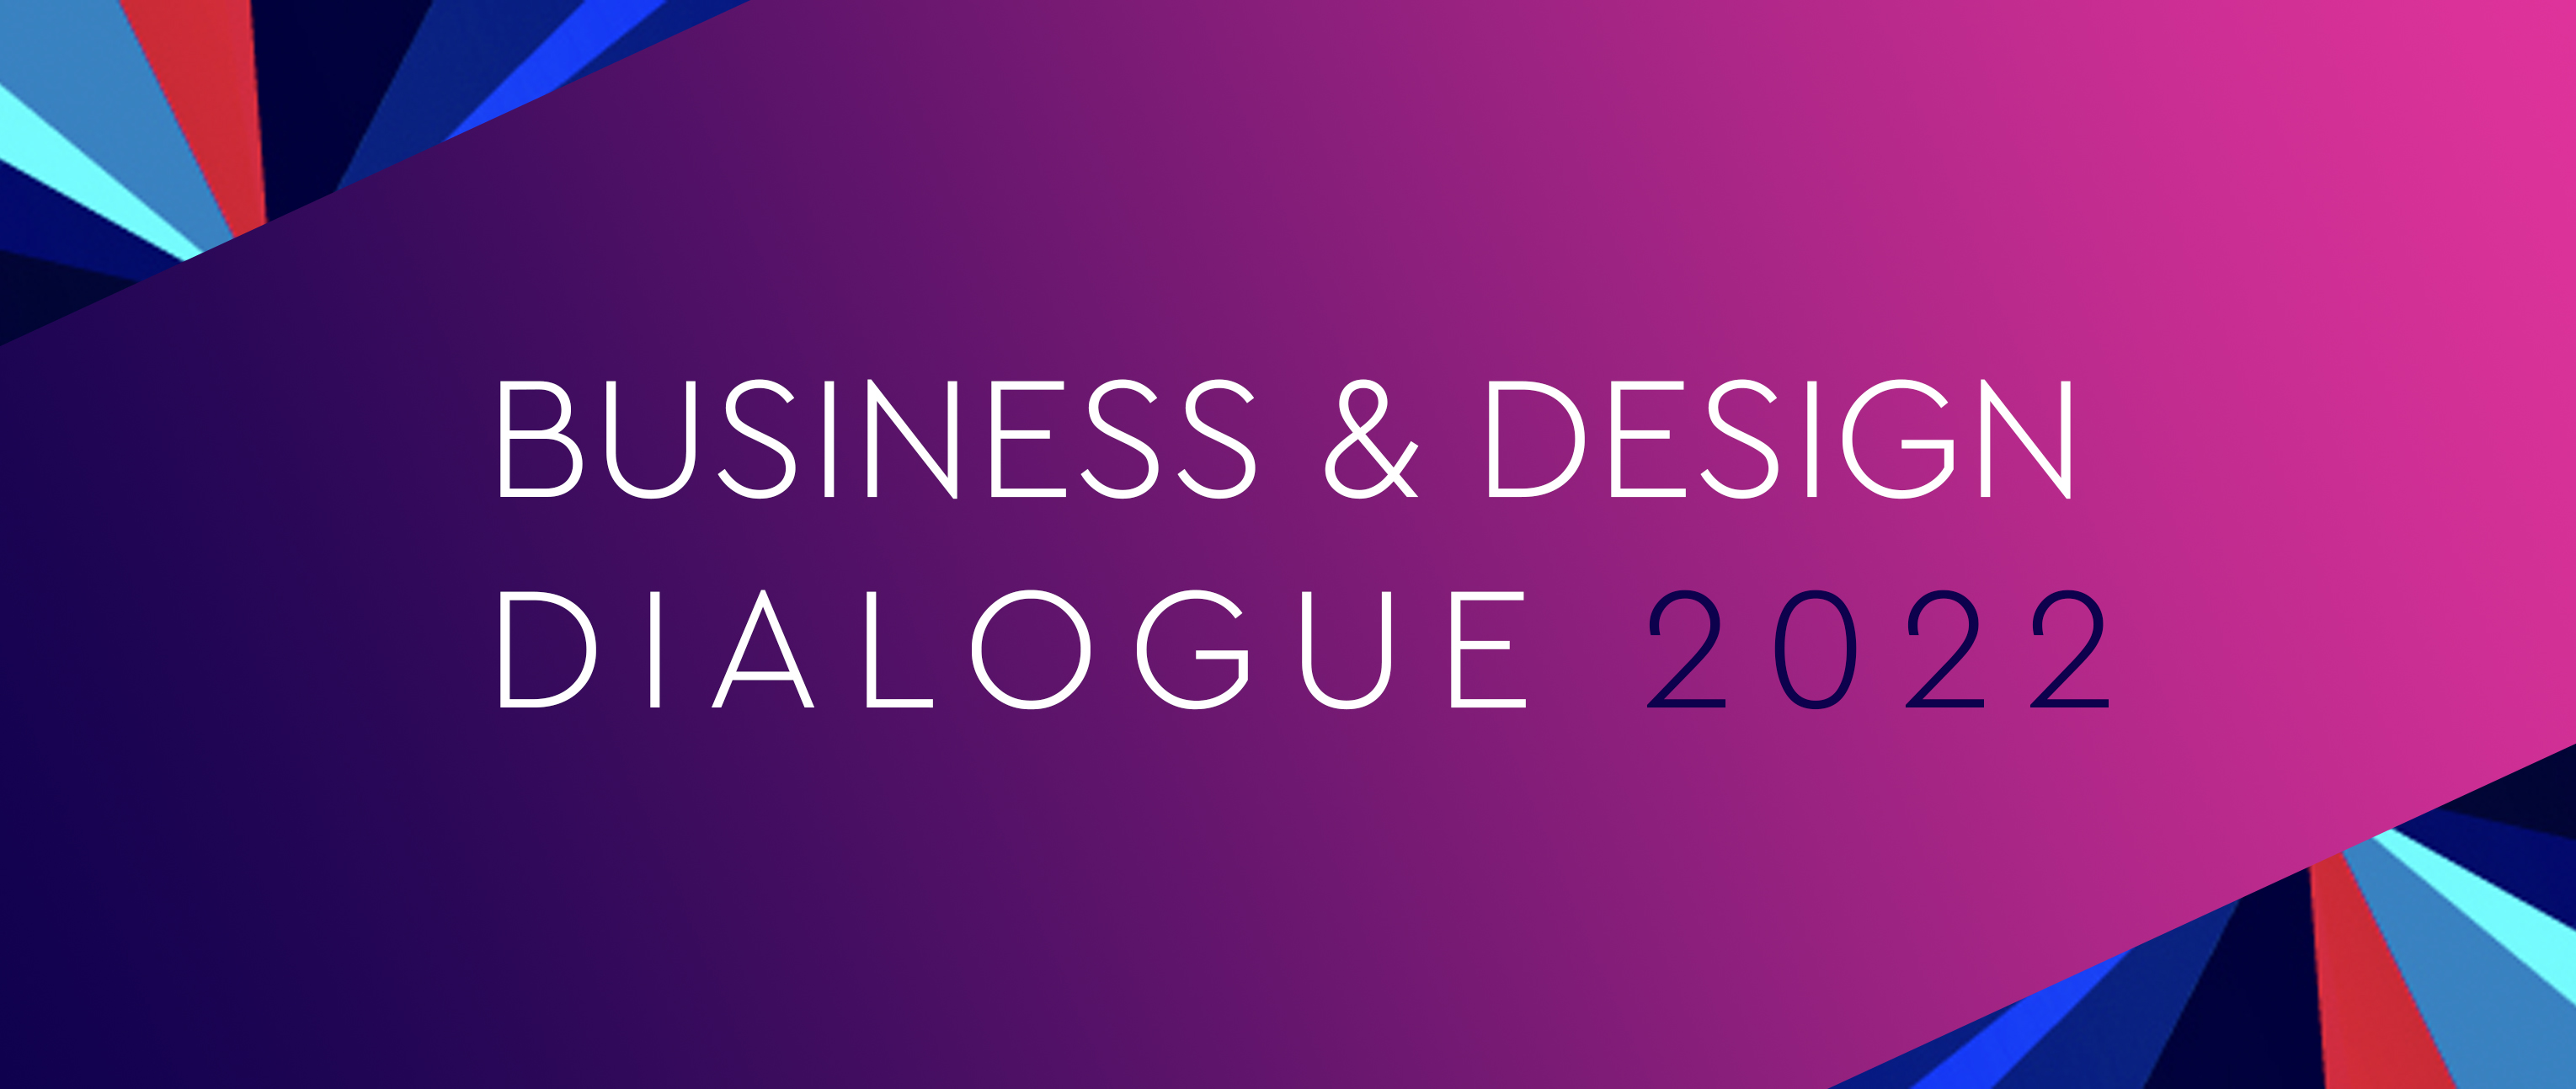 Business & Design Dialogue 2022